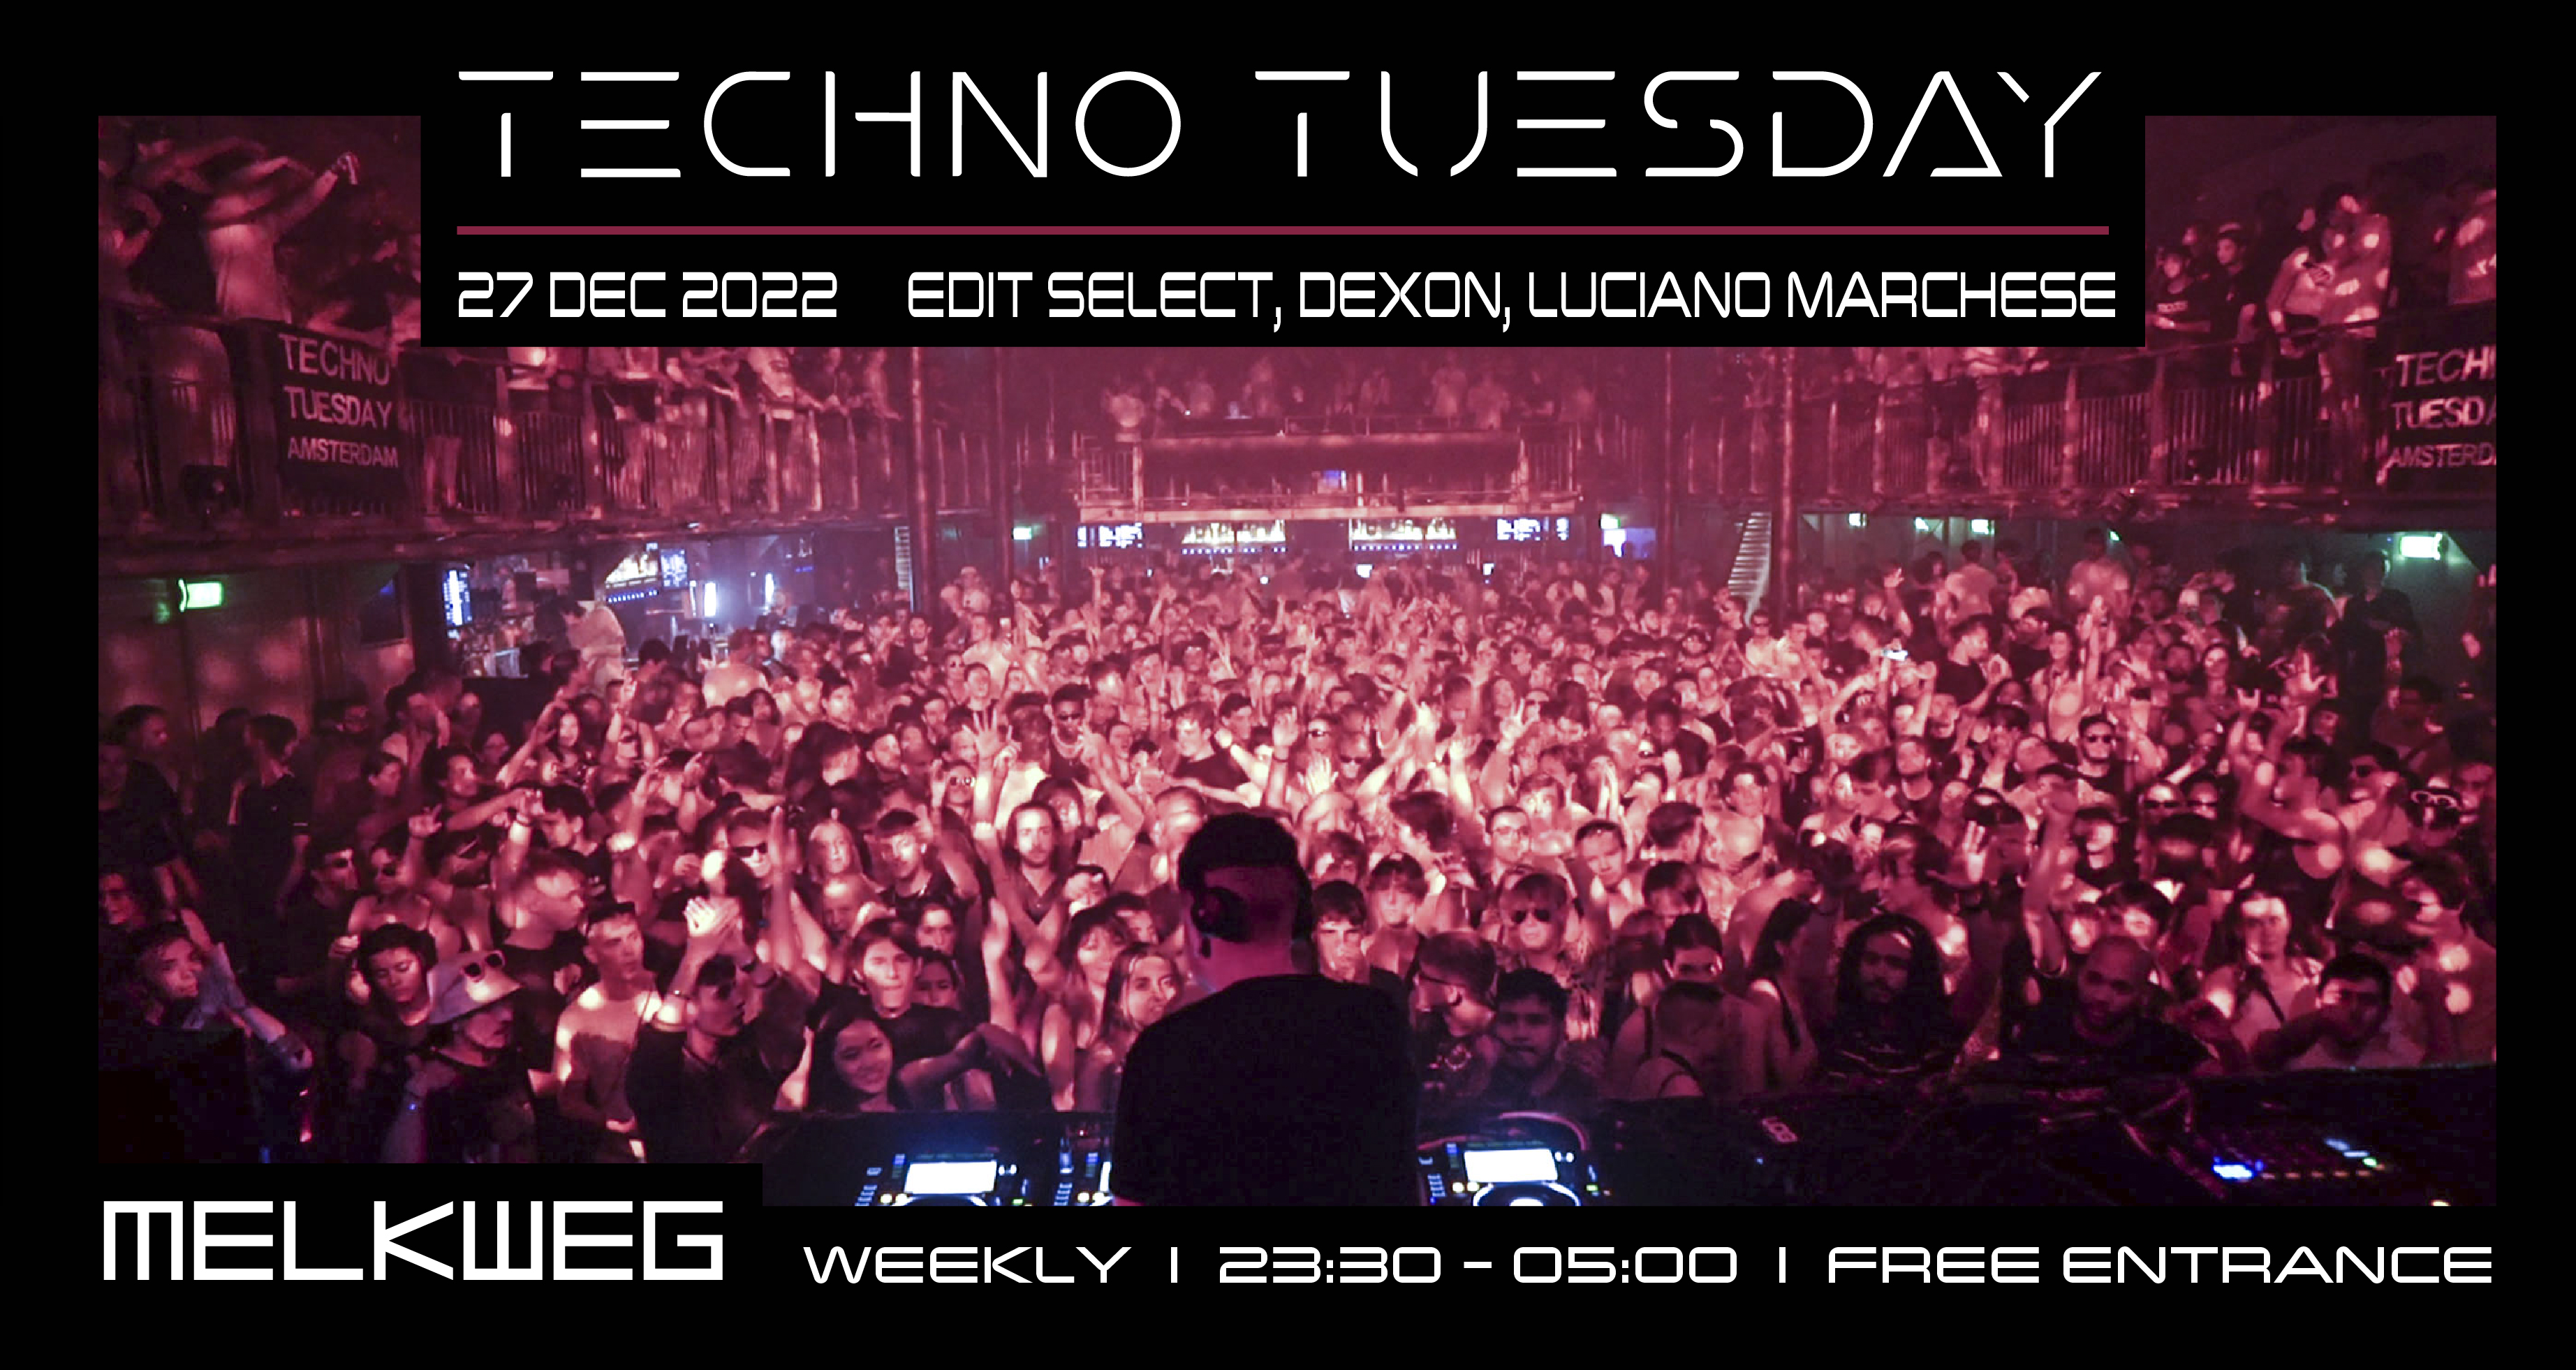 Techno Tuesday Amsterdam - Edit Select, Dexon, Luciano Marchese at Melkweg,  Amsterdam